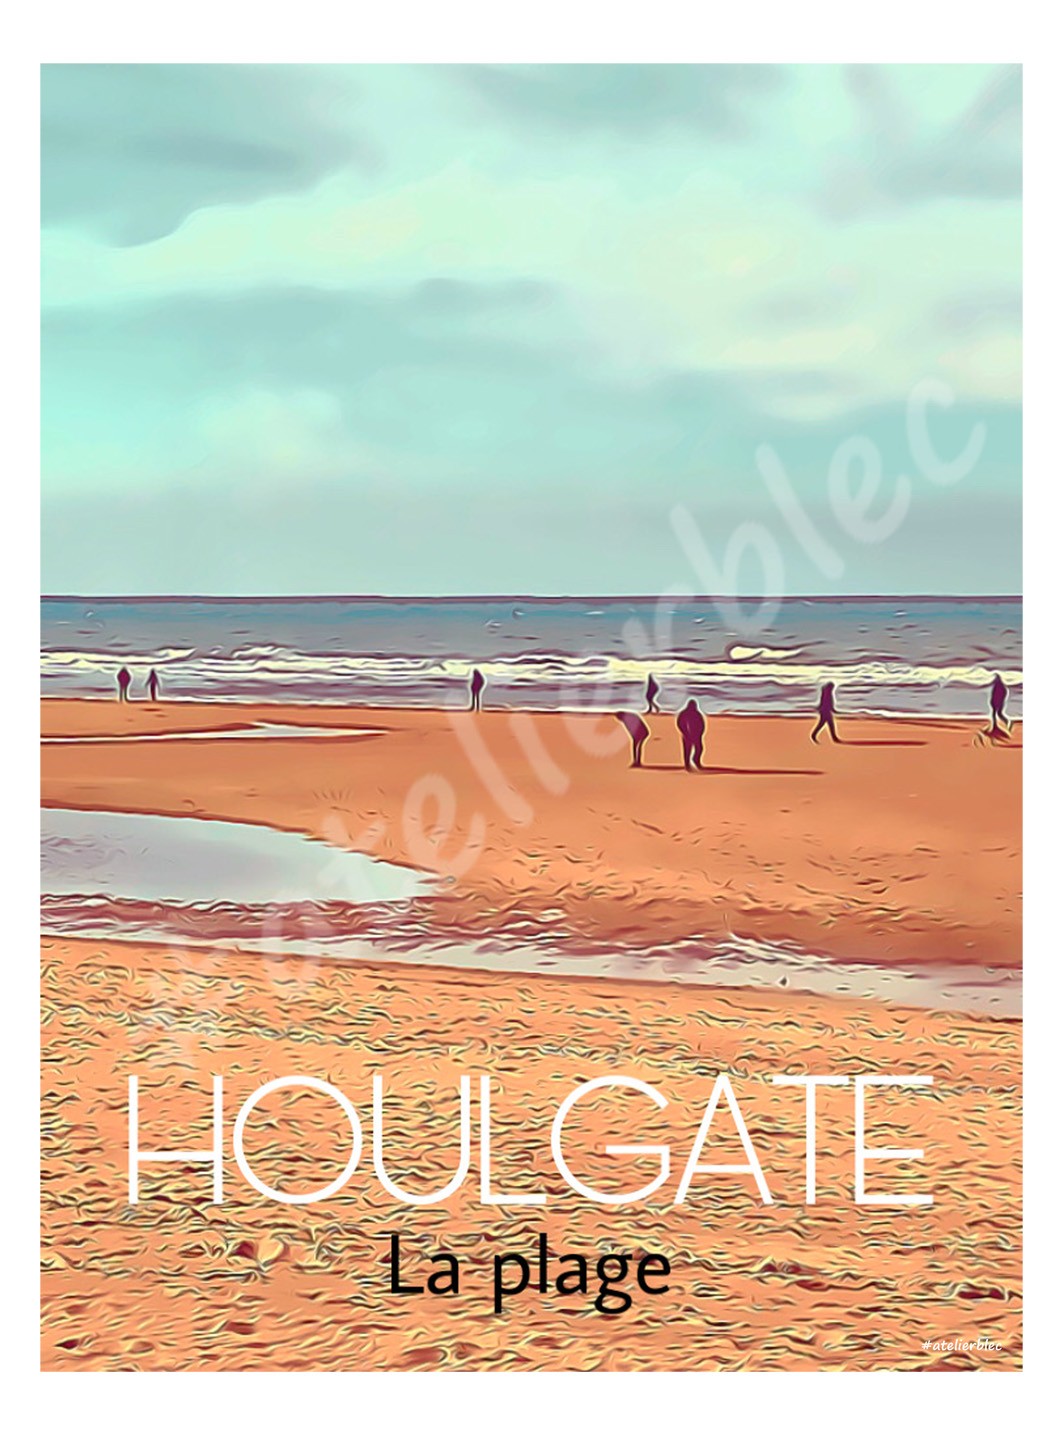 Houlgate5